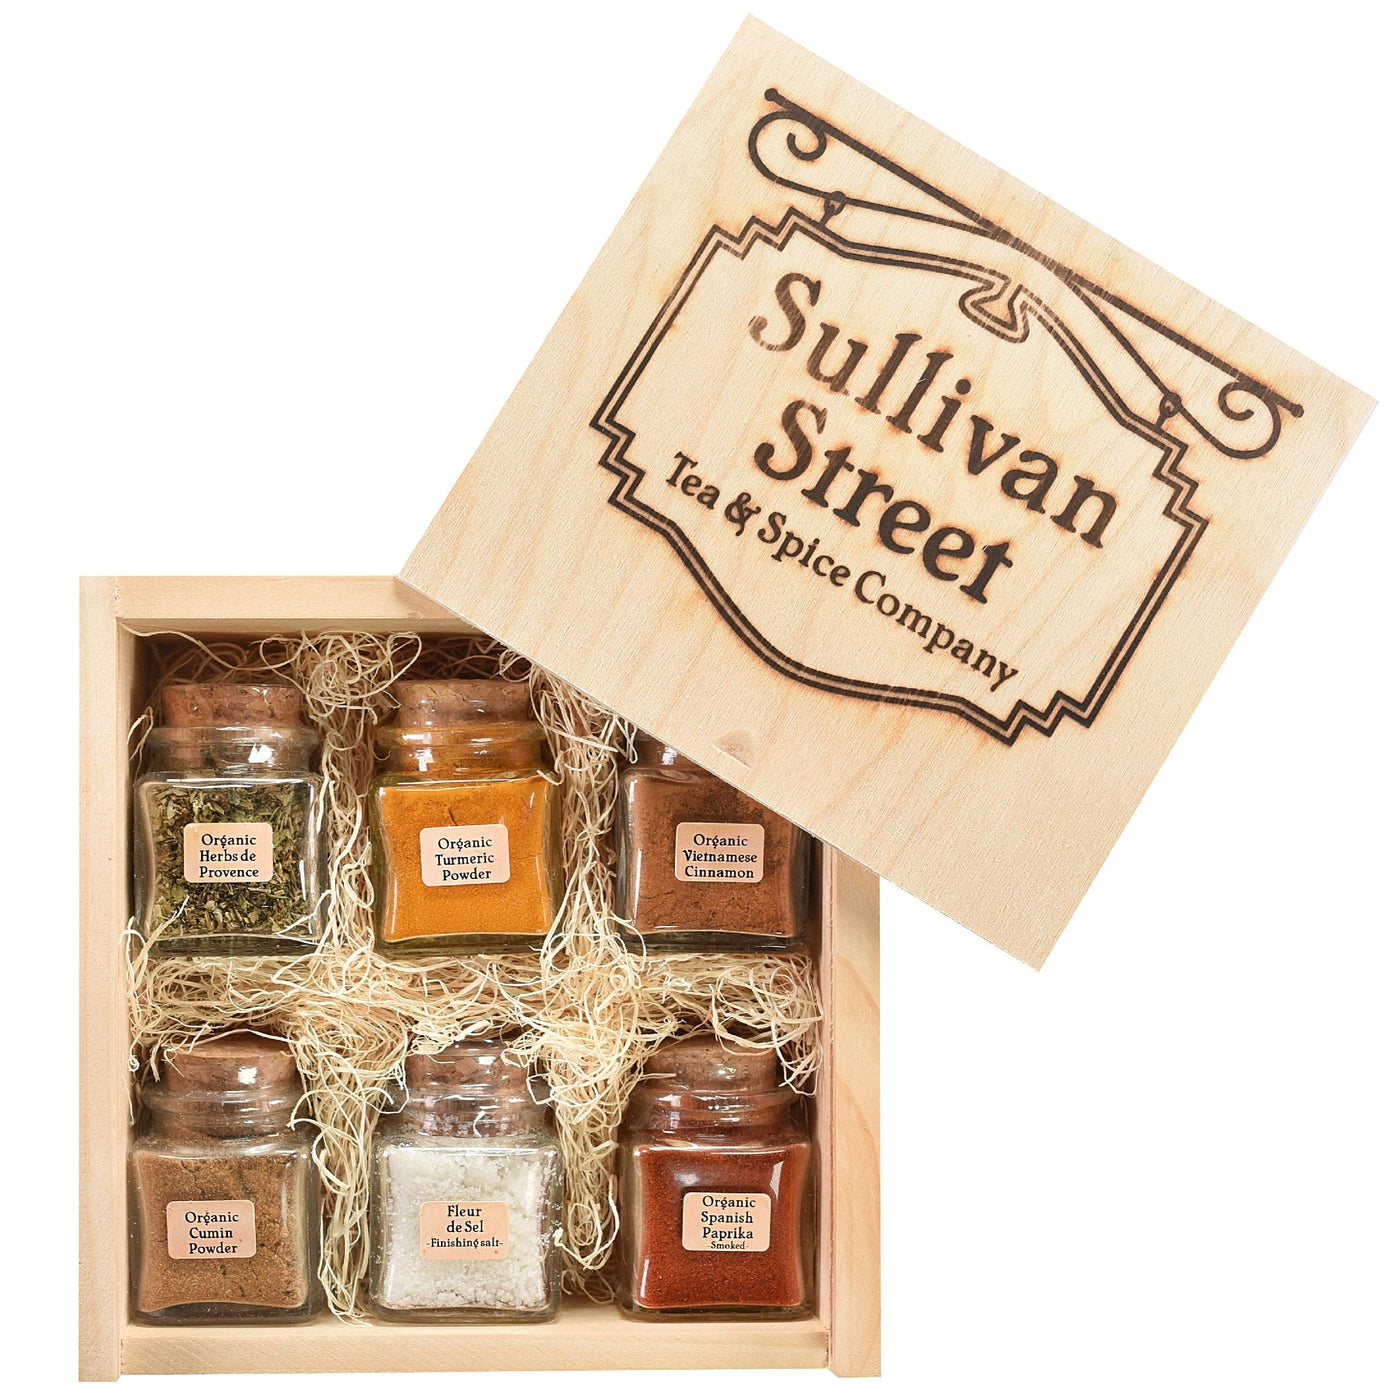 Elevated Basics Spice Gift Set - Sullivan Street Tea & Spice Company